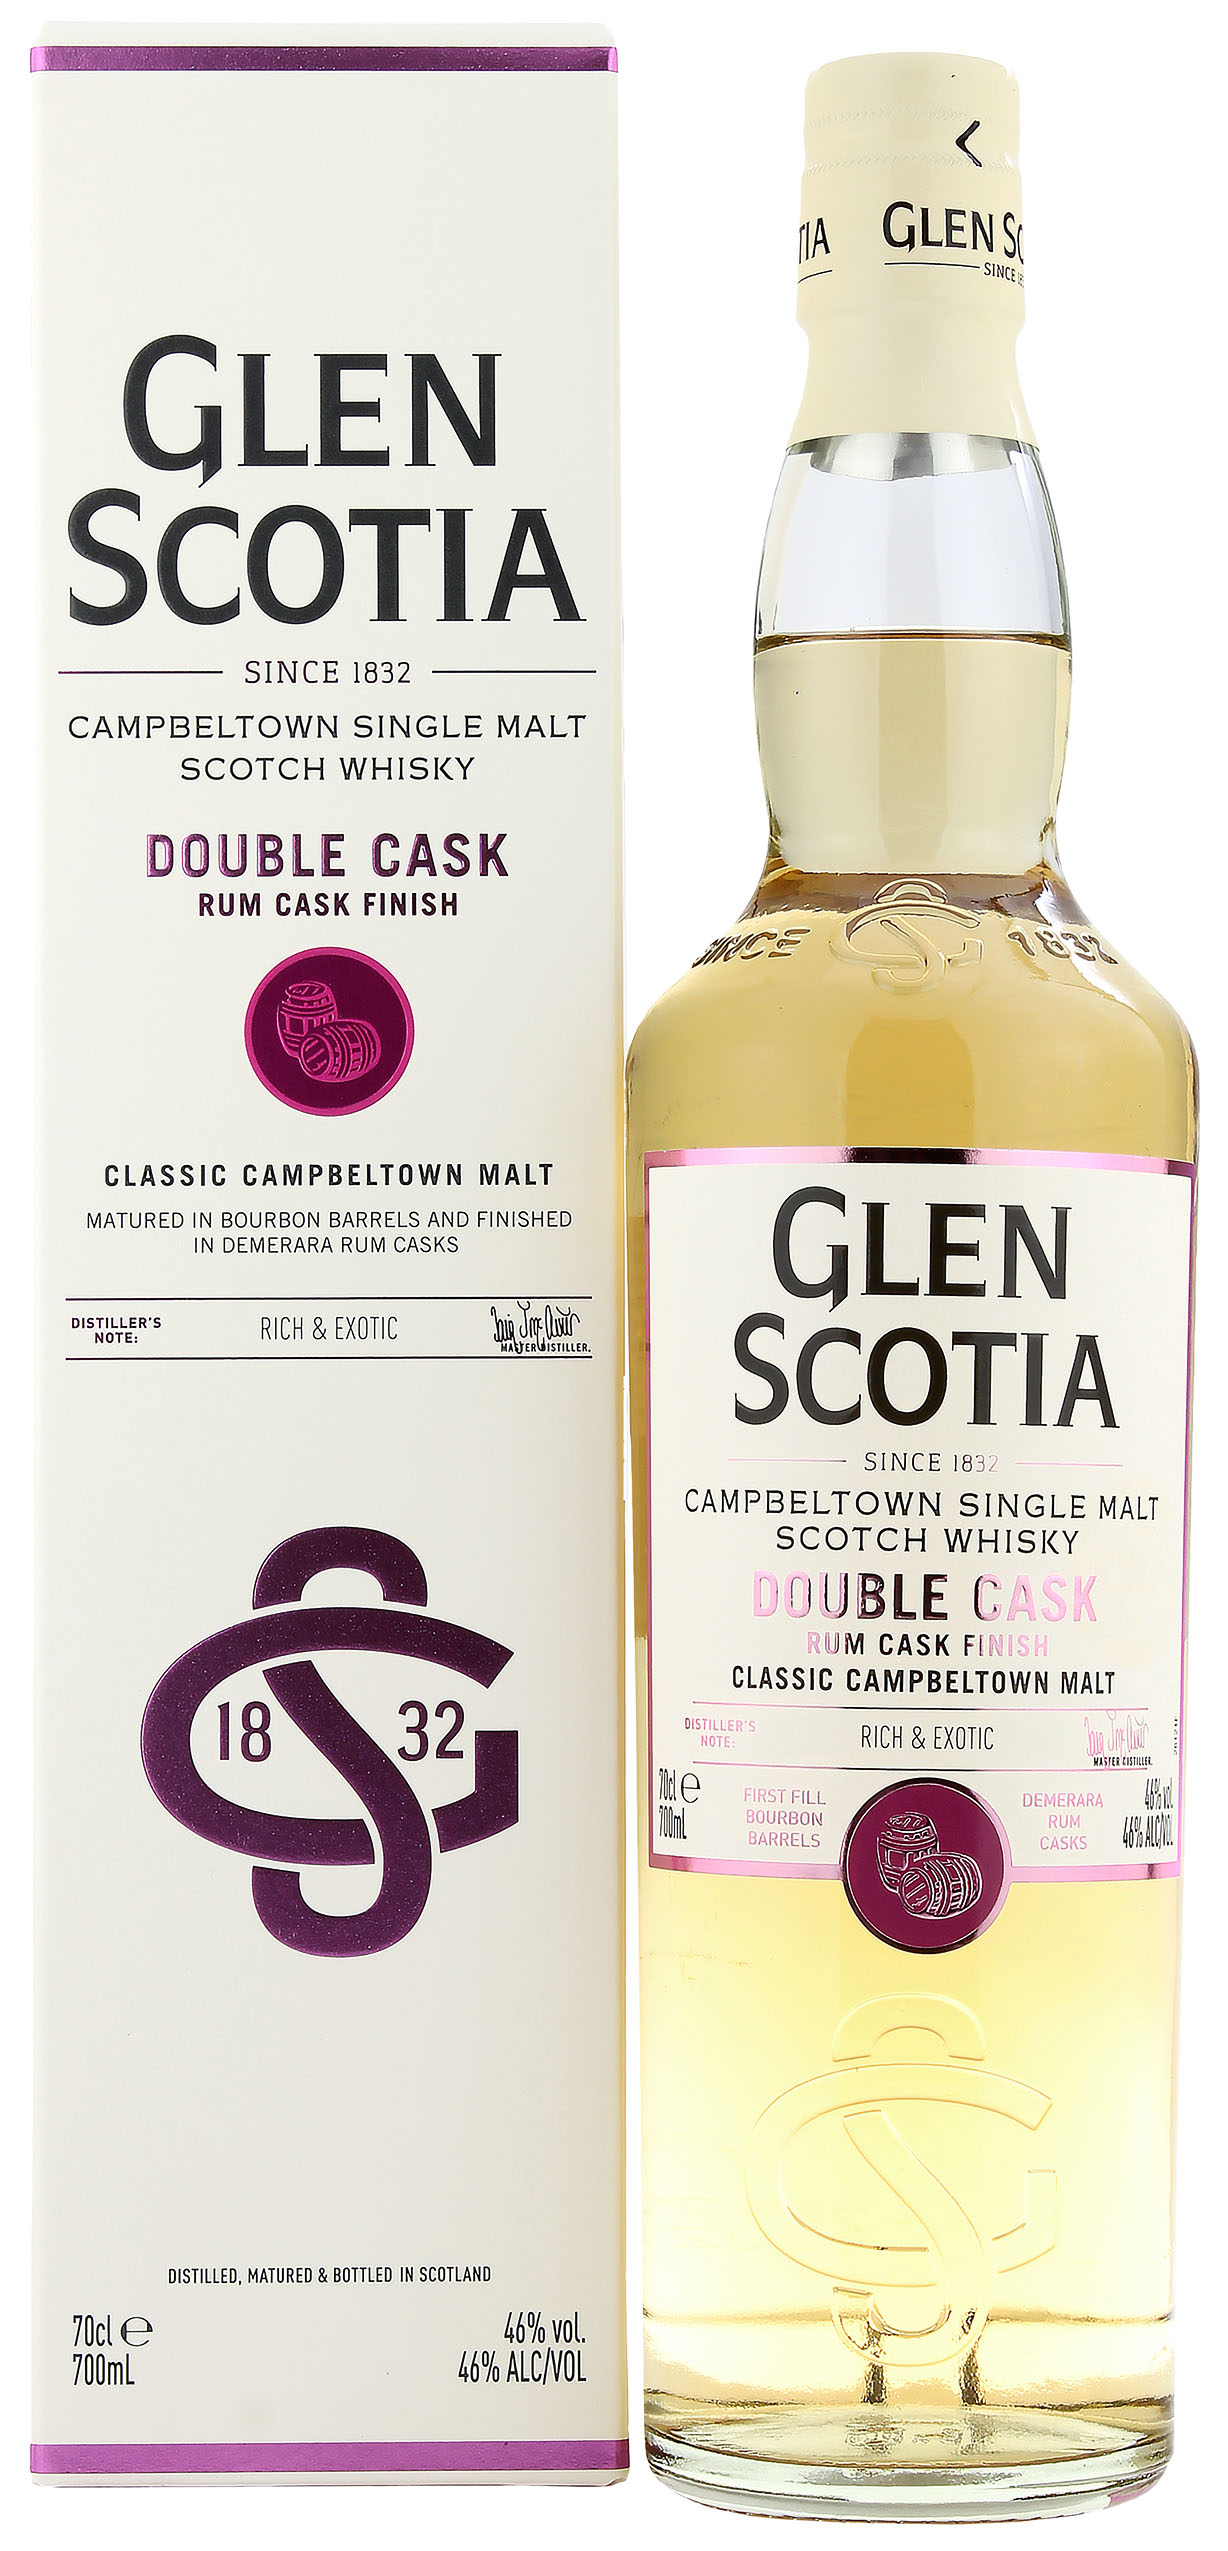 Glen Scotia Double Cask Rum Cask Finish 46.0% 0,7l